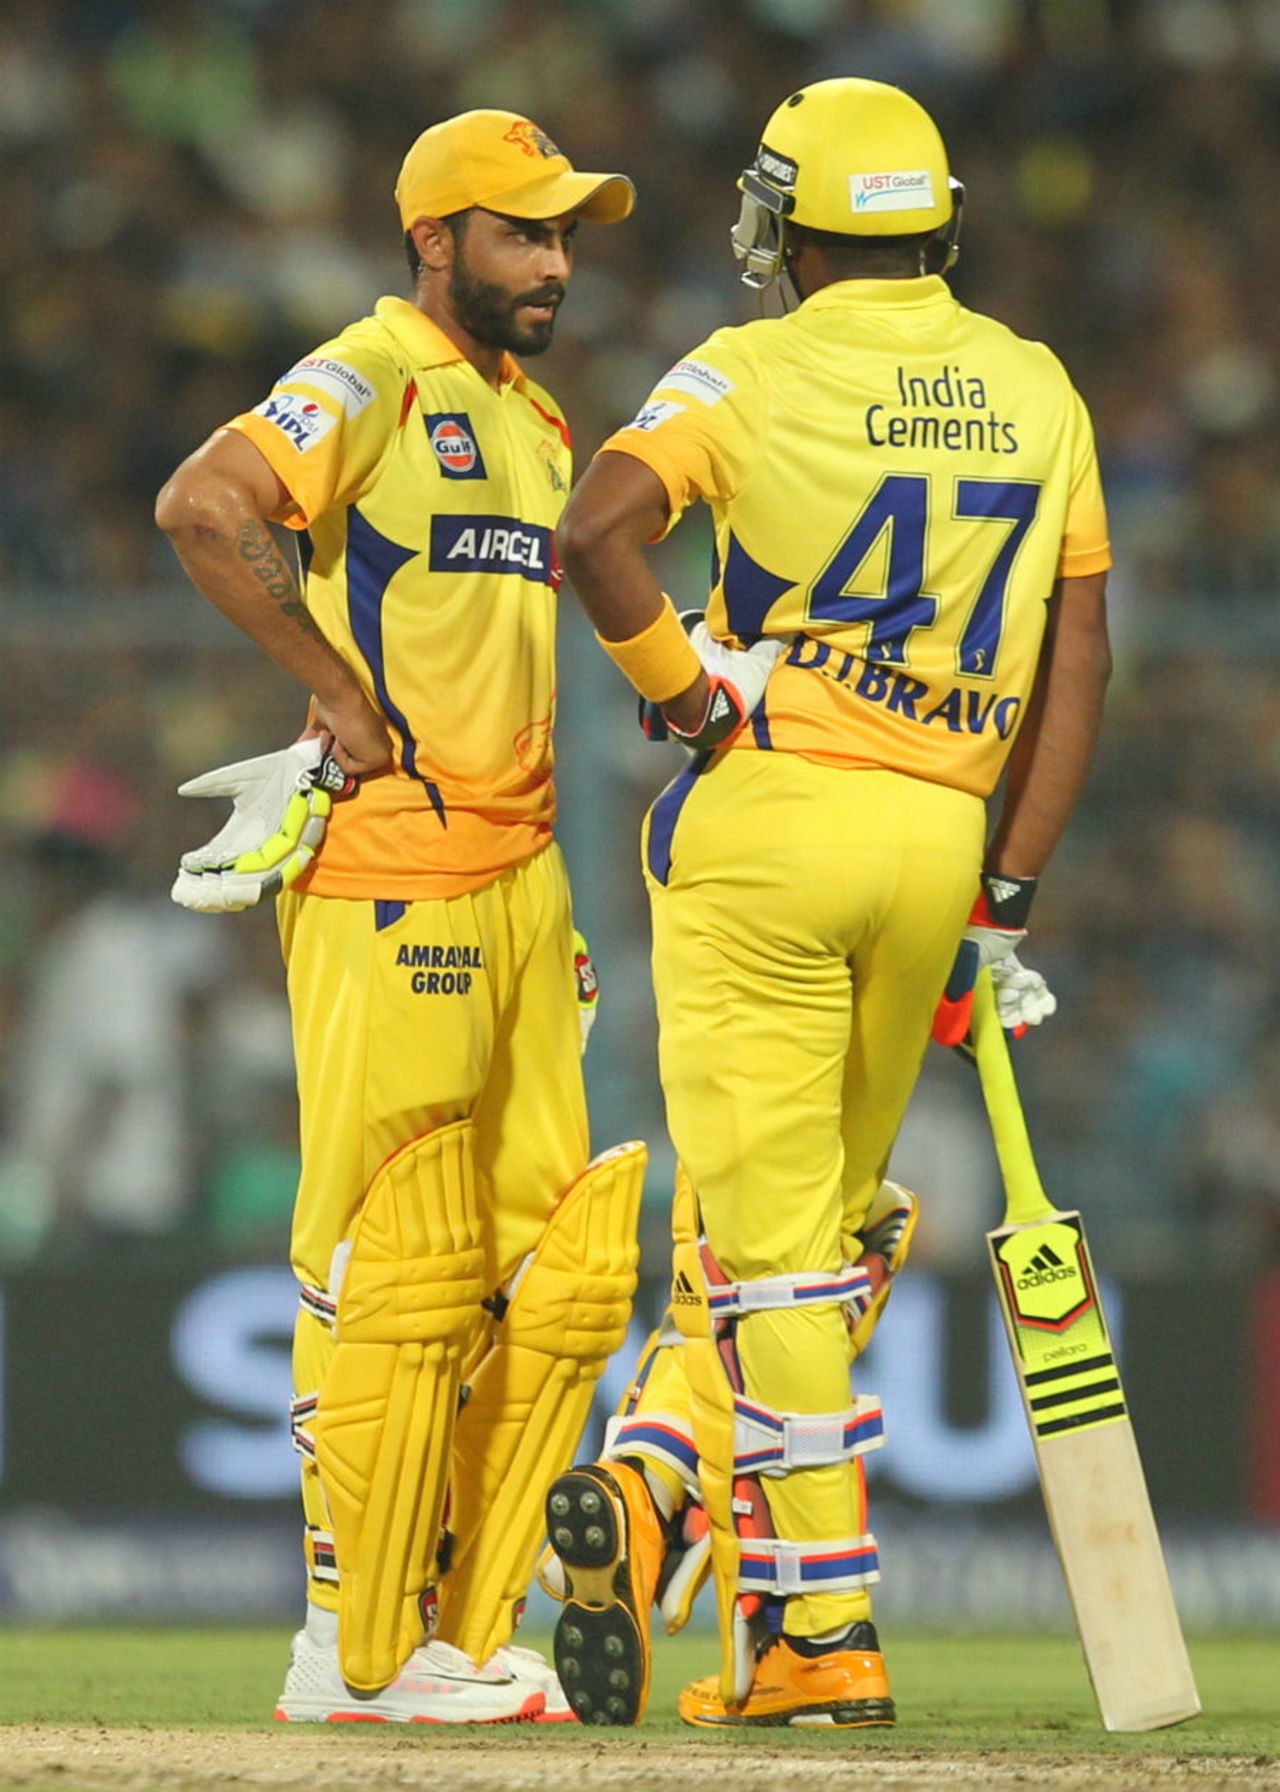 Ravindra Jadeja and Dwayne Bravo put on 57 runs for the sixth wicket, Kolkata Knight Riders v Chennai Super Kings, IPL 2015, Kolkata, April 30, 2015